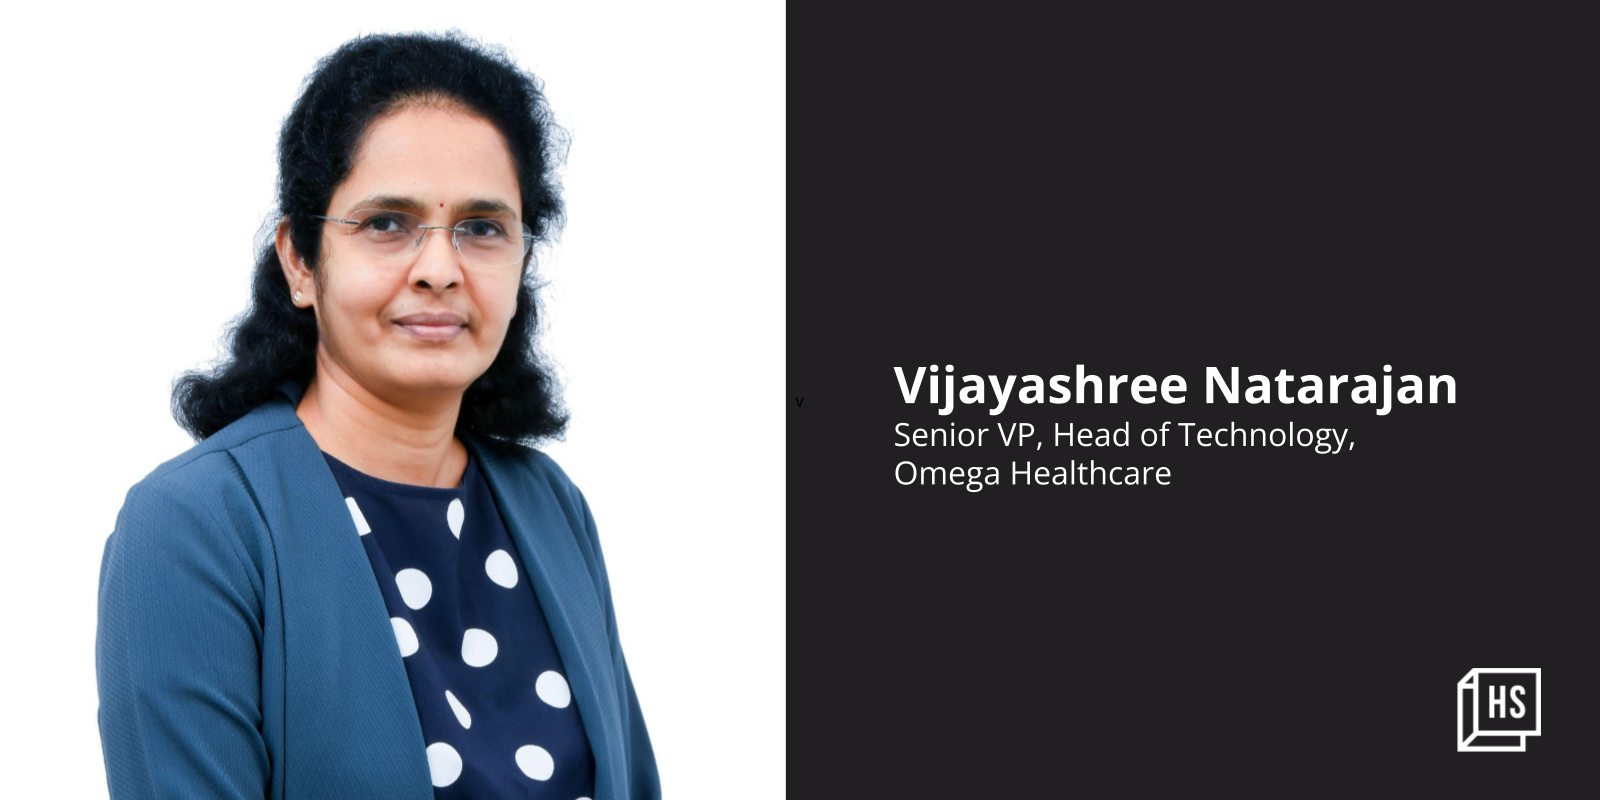 Women don't need special treatment and are immensely talented: Vijayashree Natarajan, Omega Healthcare

